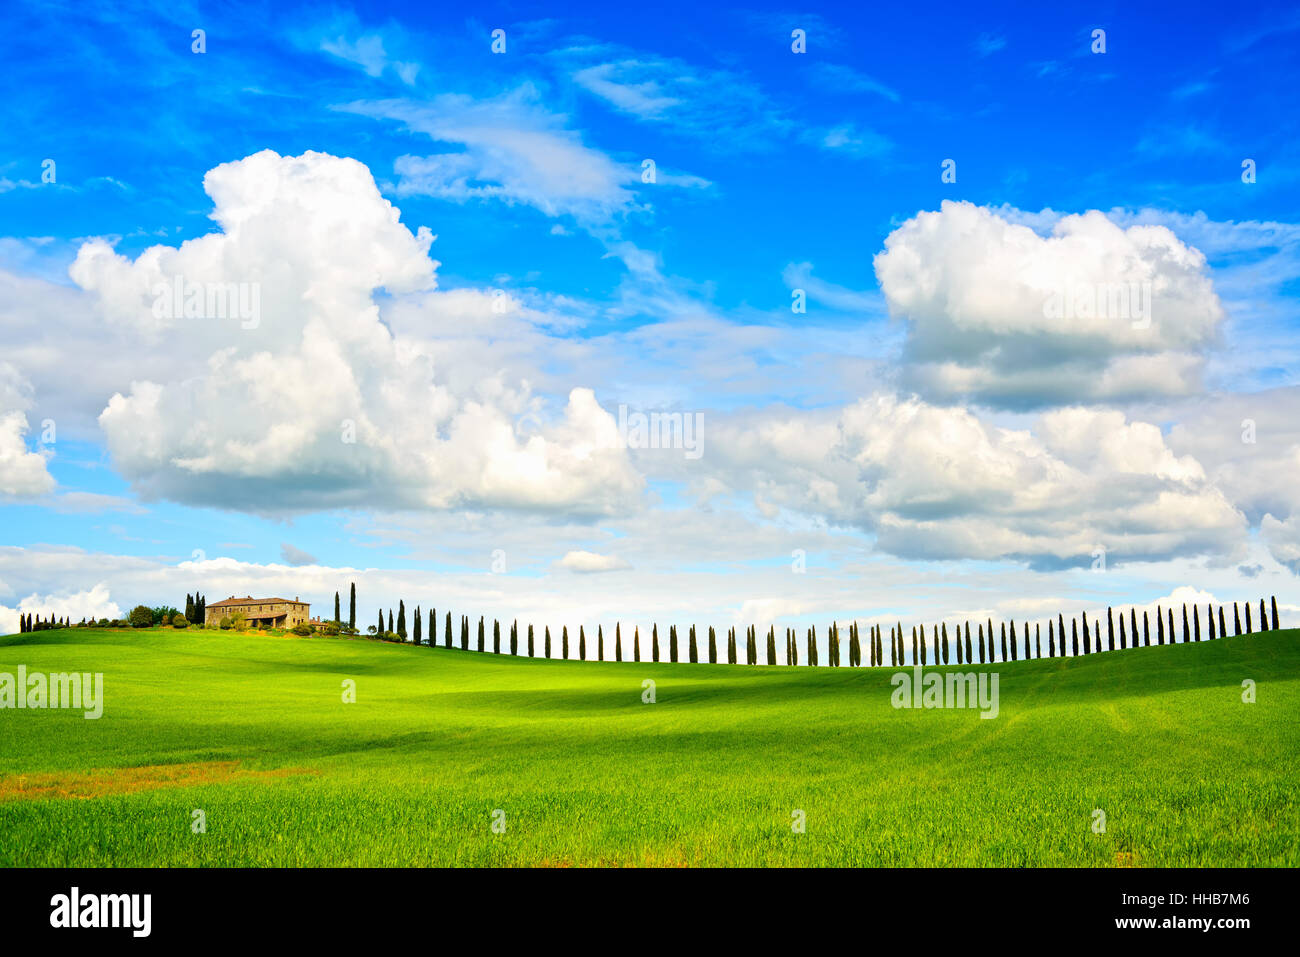 Toskana, Ackerland, Zypresse Bäume Zeile und gepflügtes Feld, Landschaft. Siena, Val d Orcia, Italien, Europa. Stockfoto